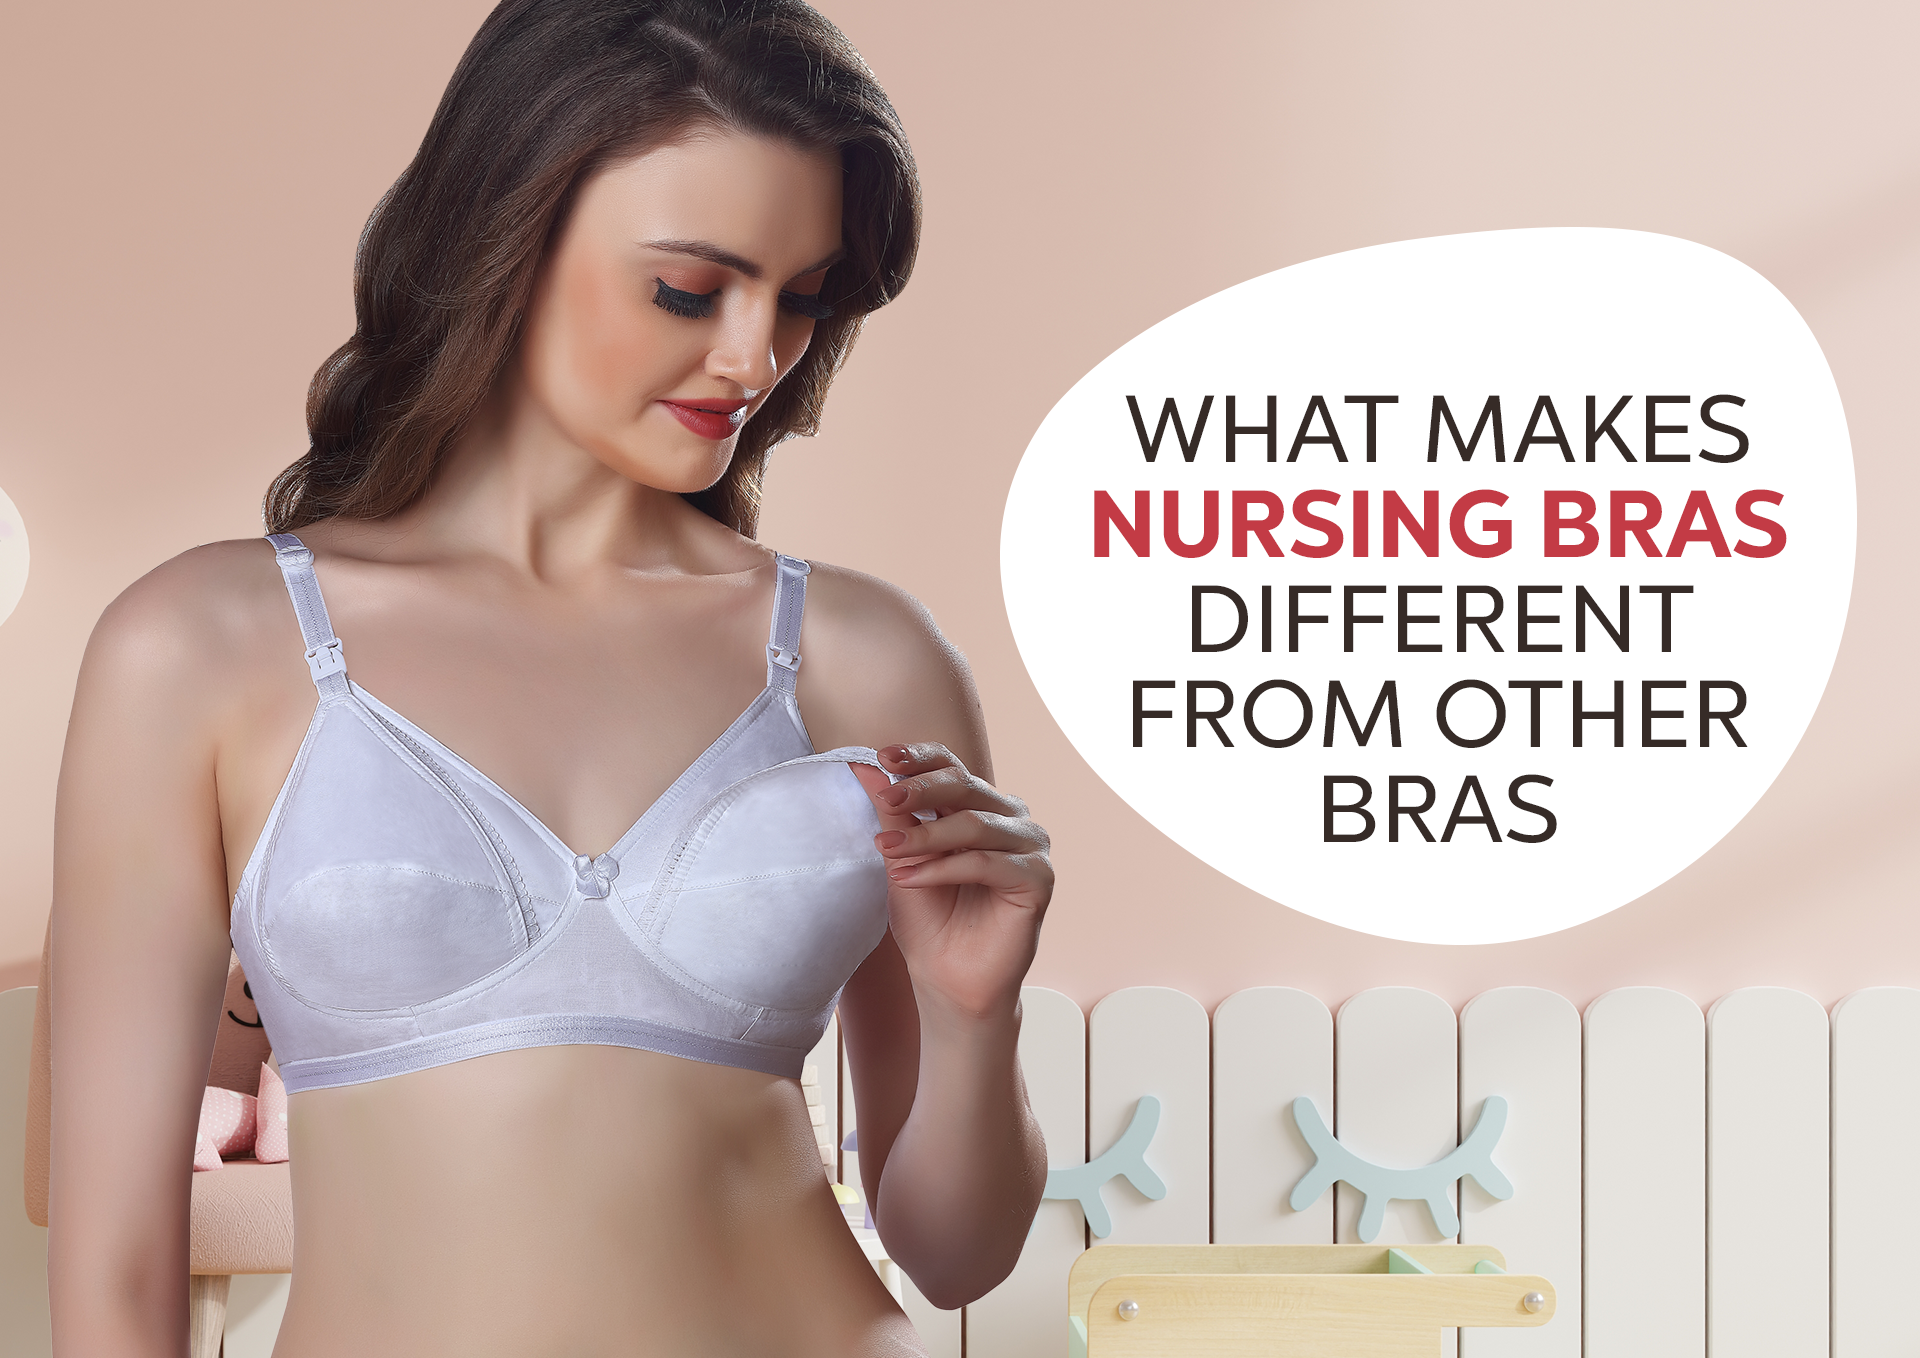 Are maternity bras necessary?